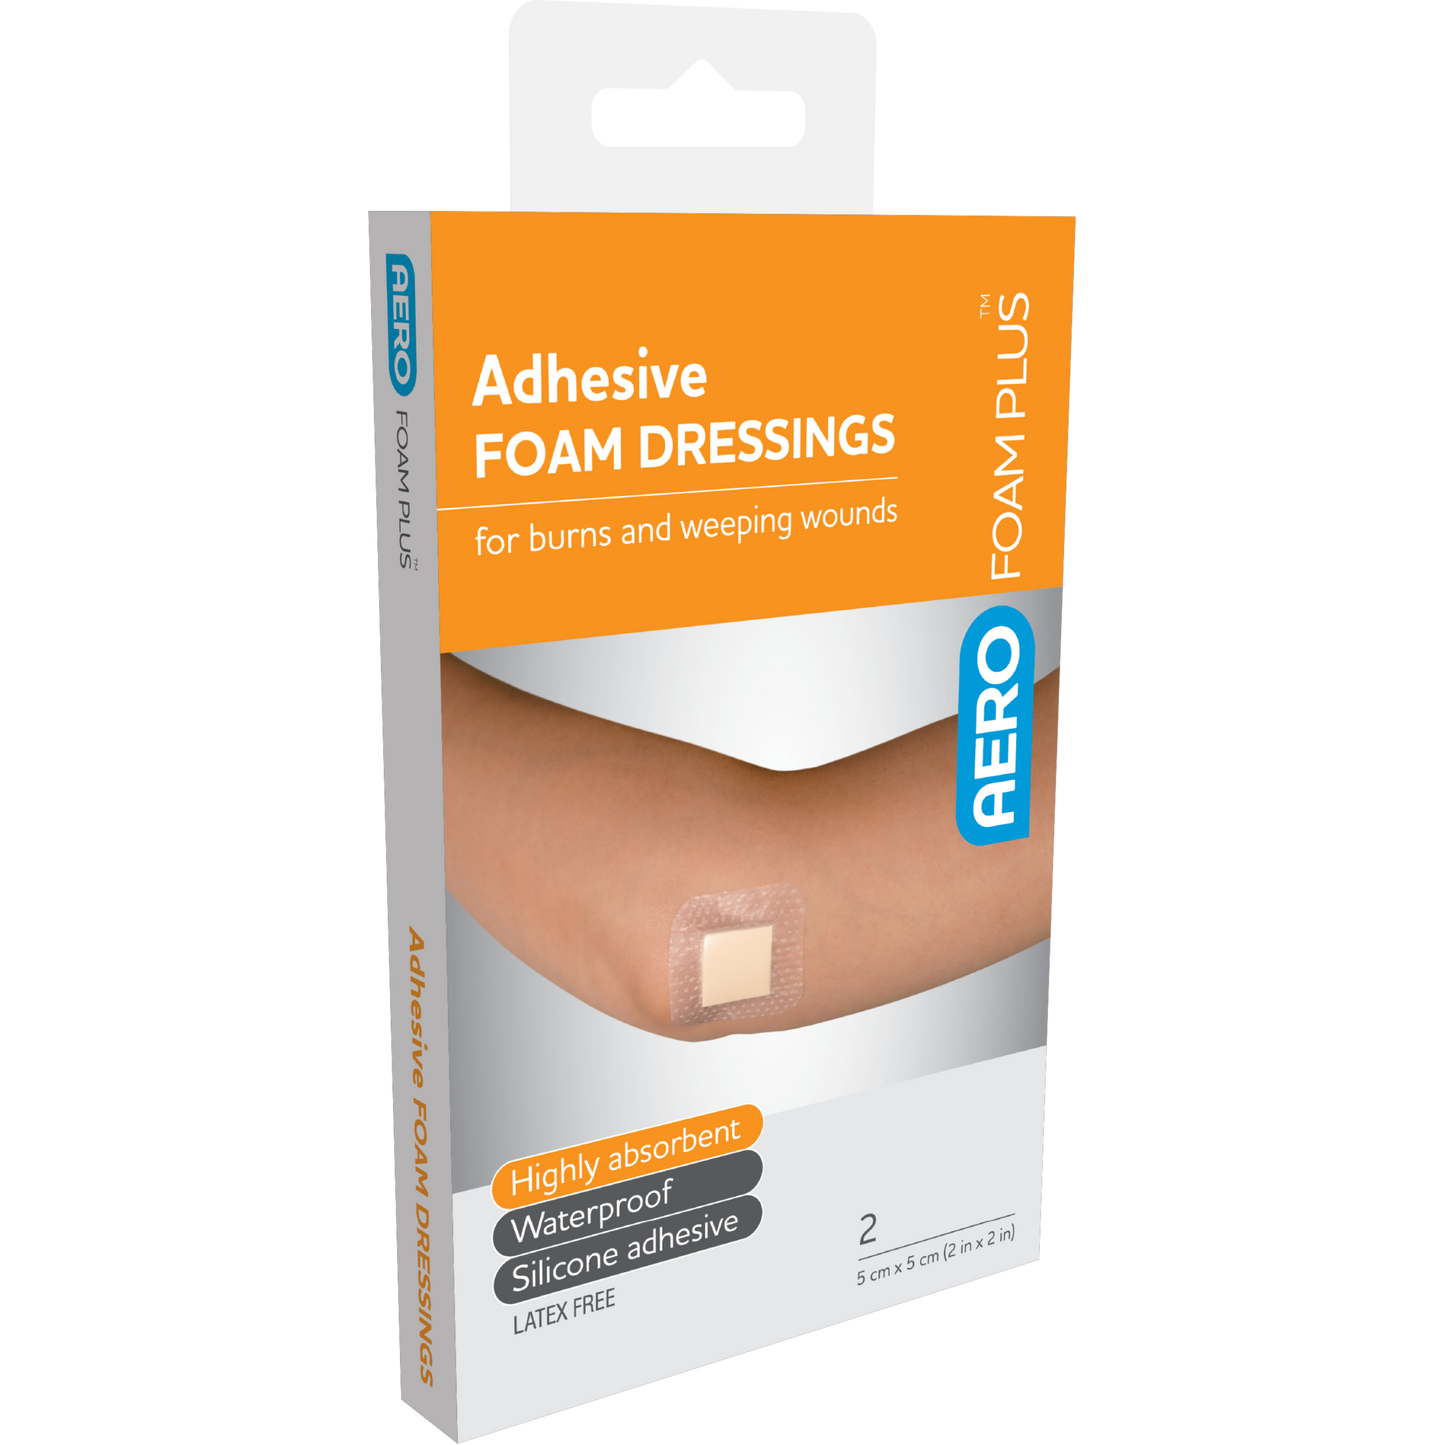 AEROFOAM PLUS Adhesive Foam Dressing Range  Box 2